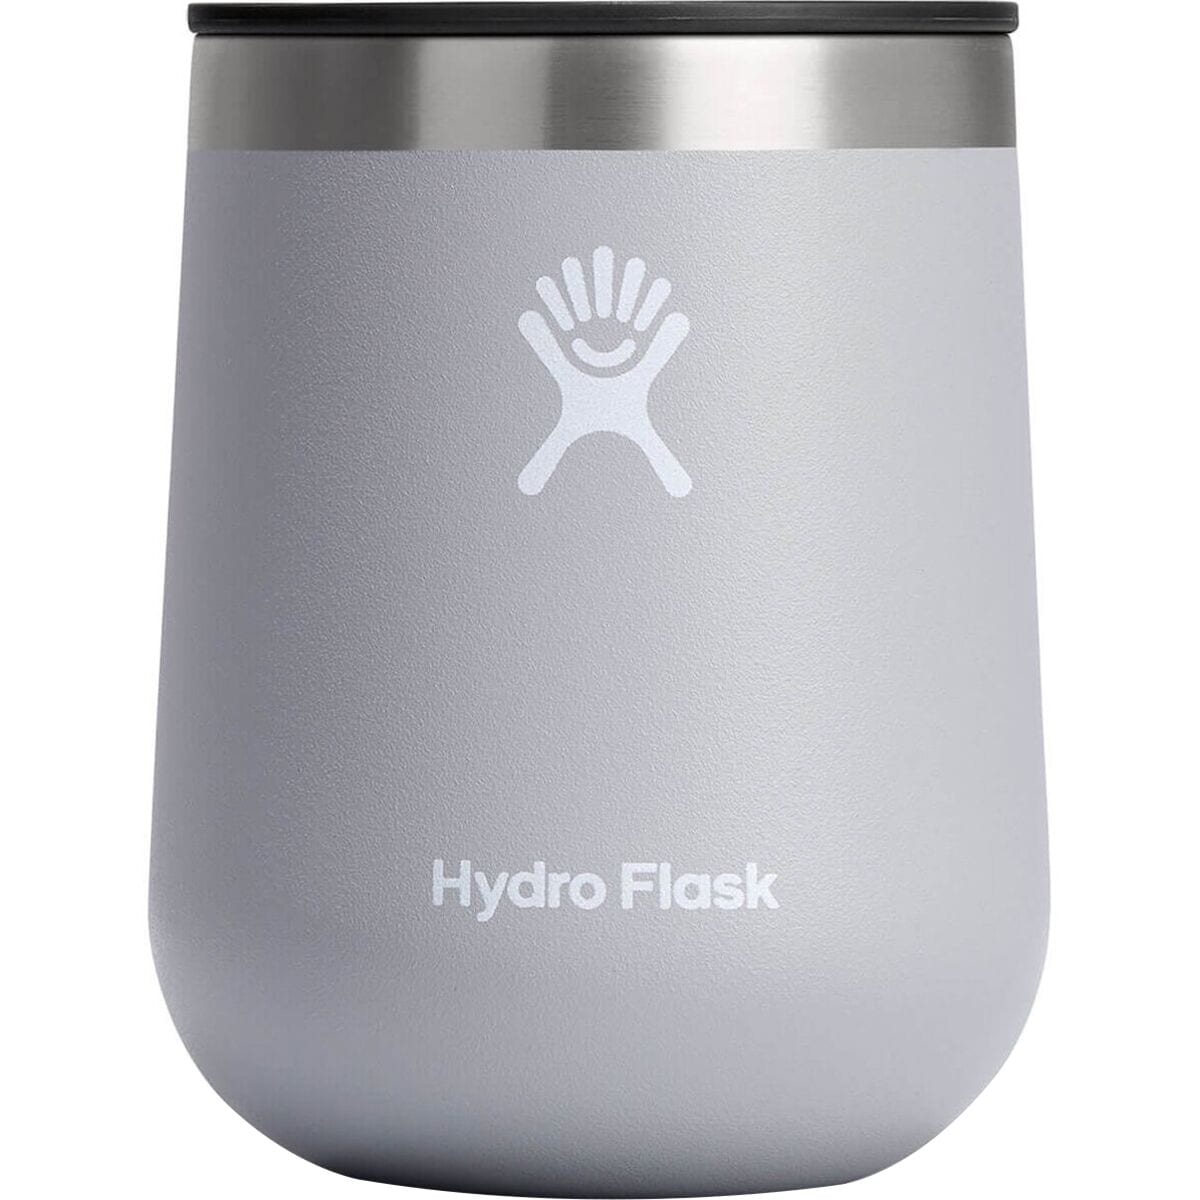 Hydro Flask 10 oz. Ceramic Wine Tumbler, Cups & Mugs